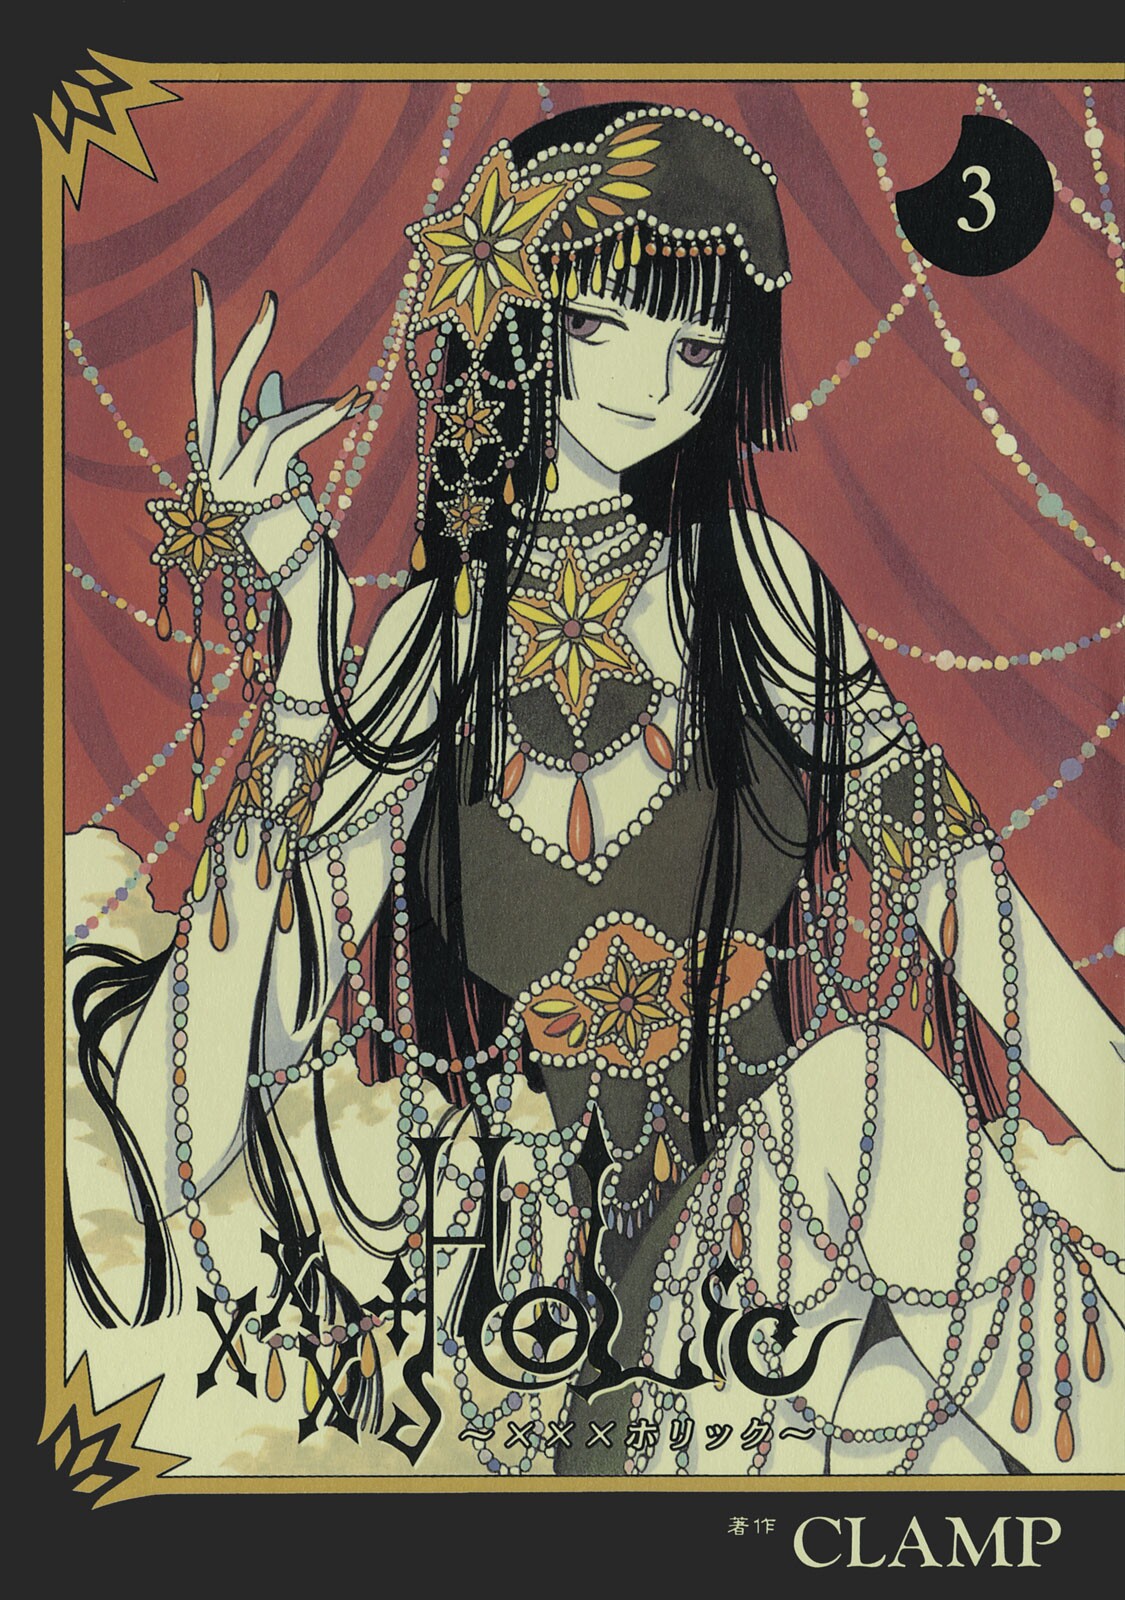 xxxholic manga cover